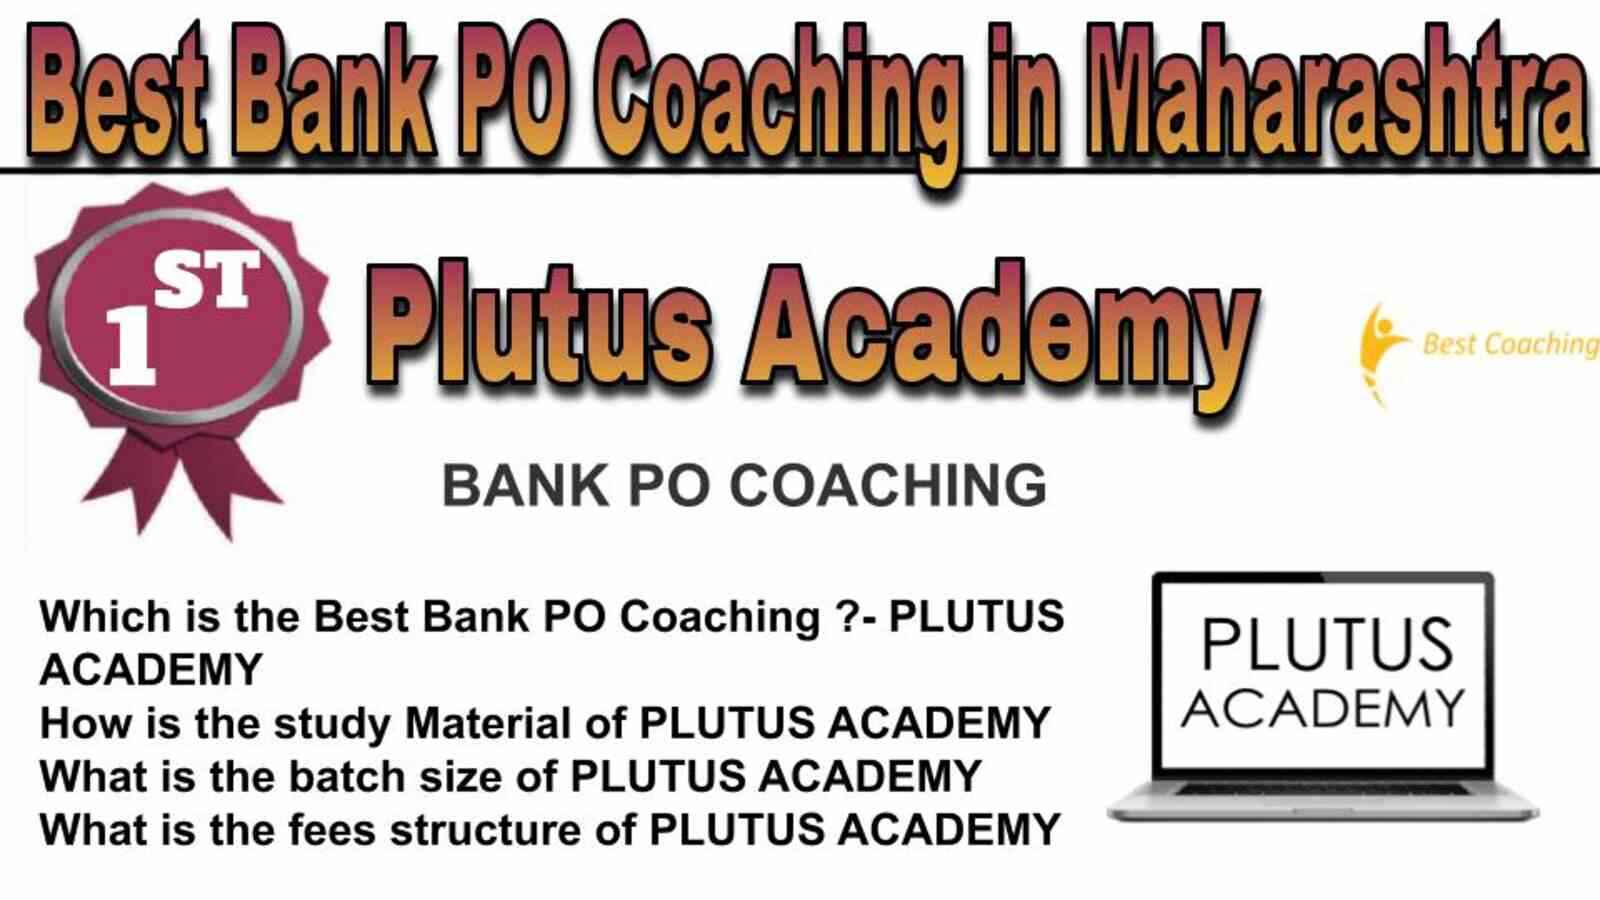 Top Bank PO Coaching in Maharashtra